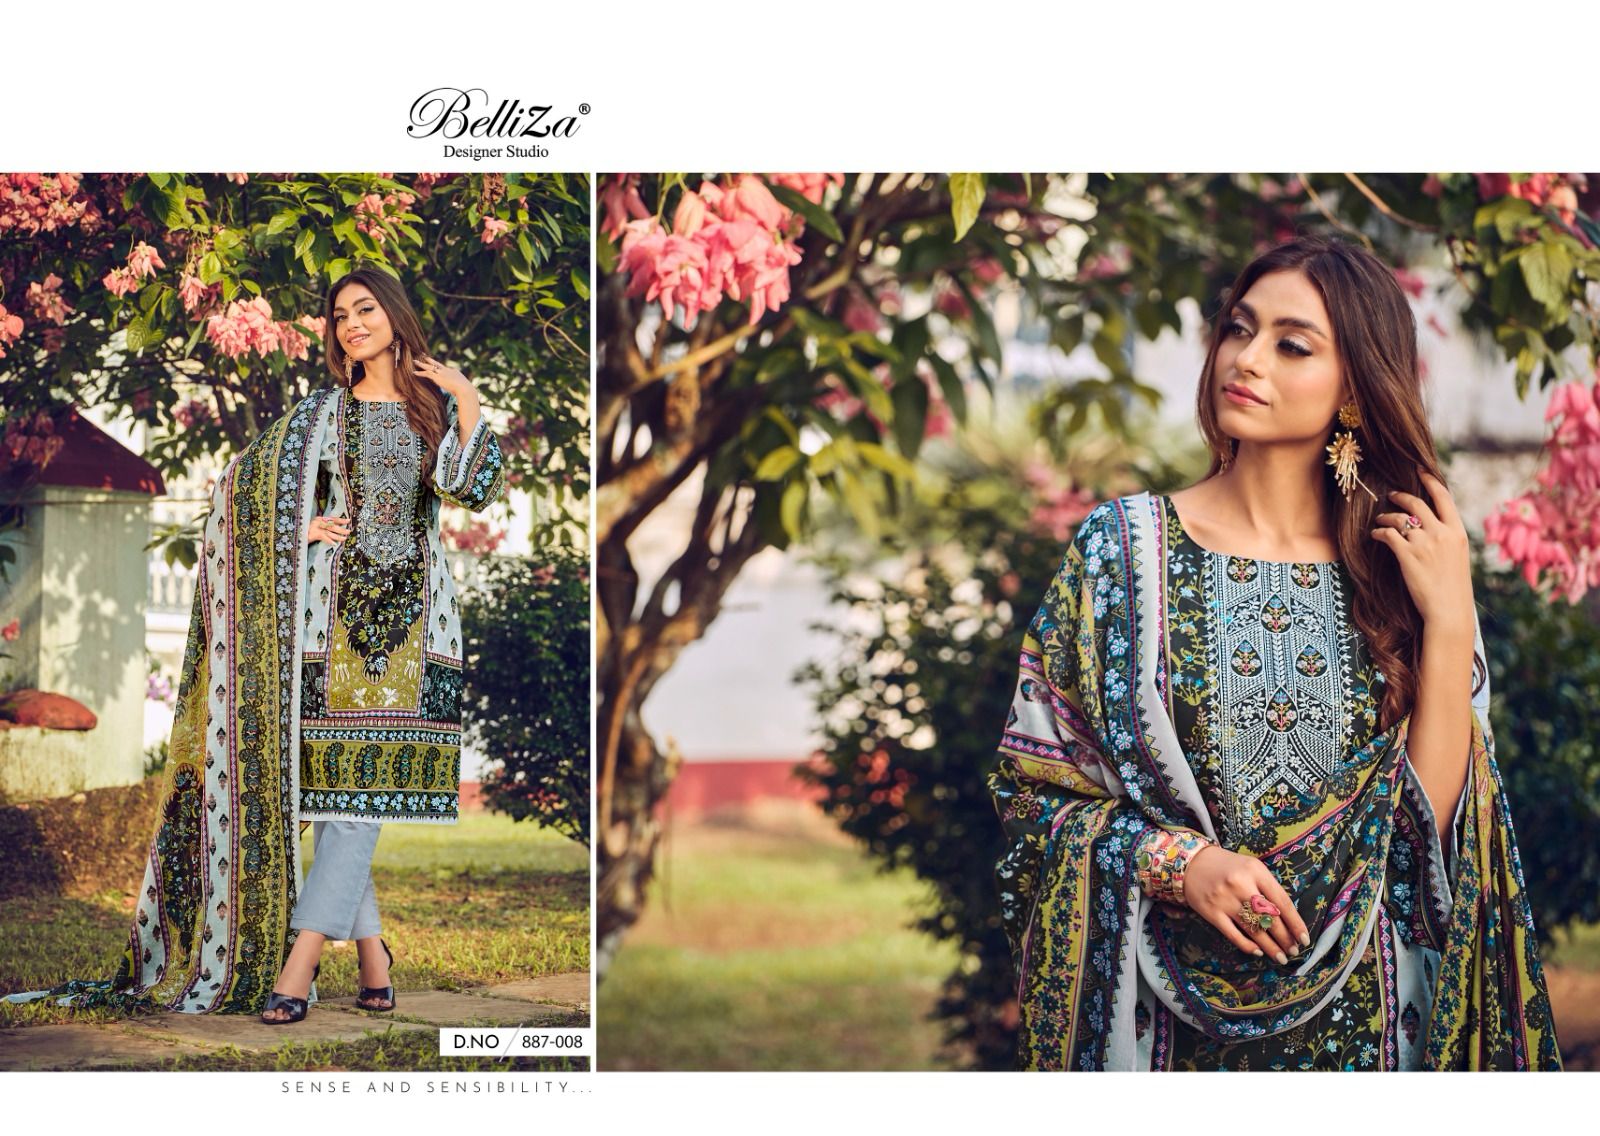 Naira Vol 38 Belliza Designer Studio Cotton Karachi Salwar Suits